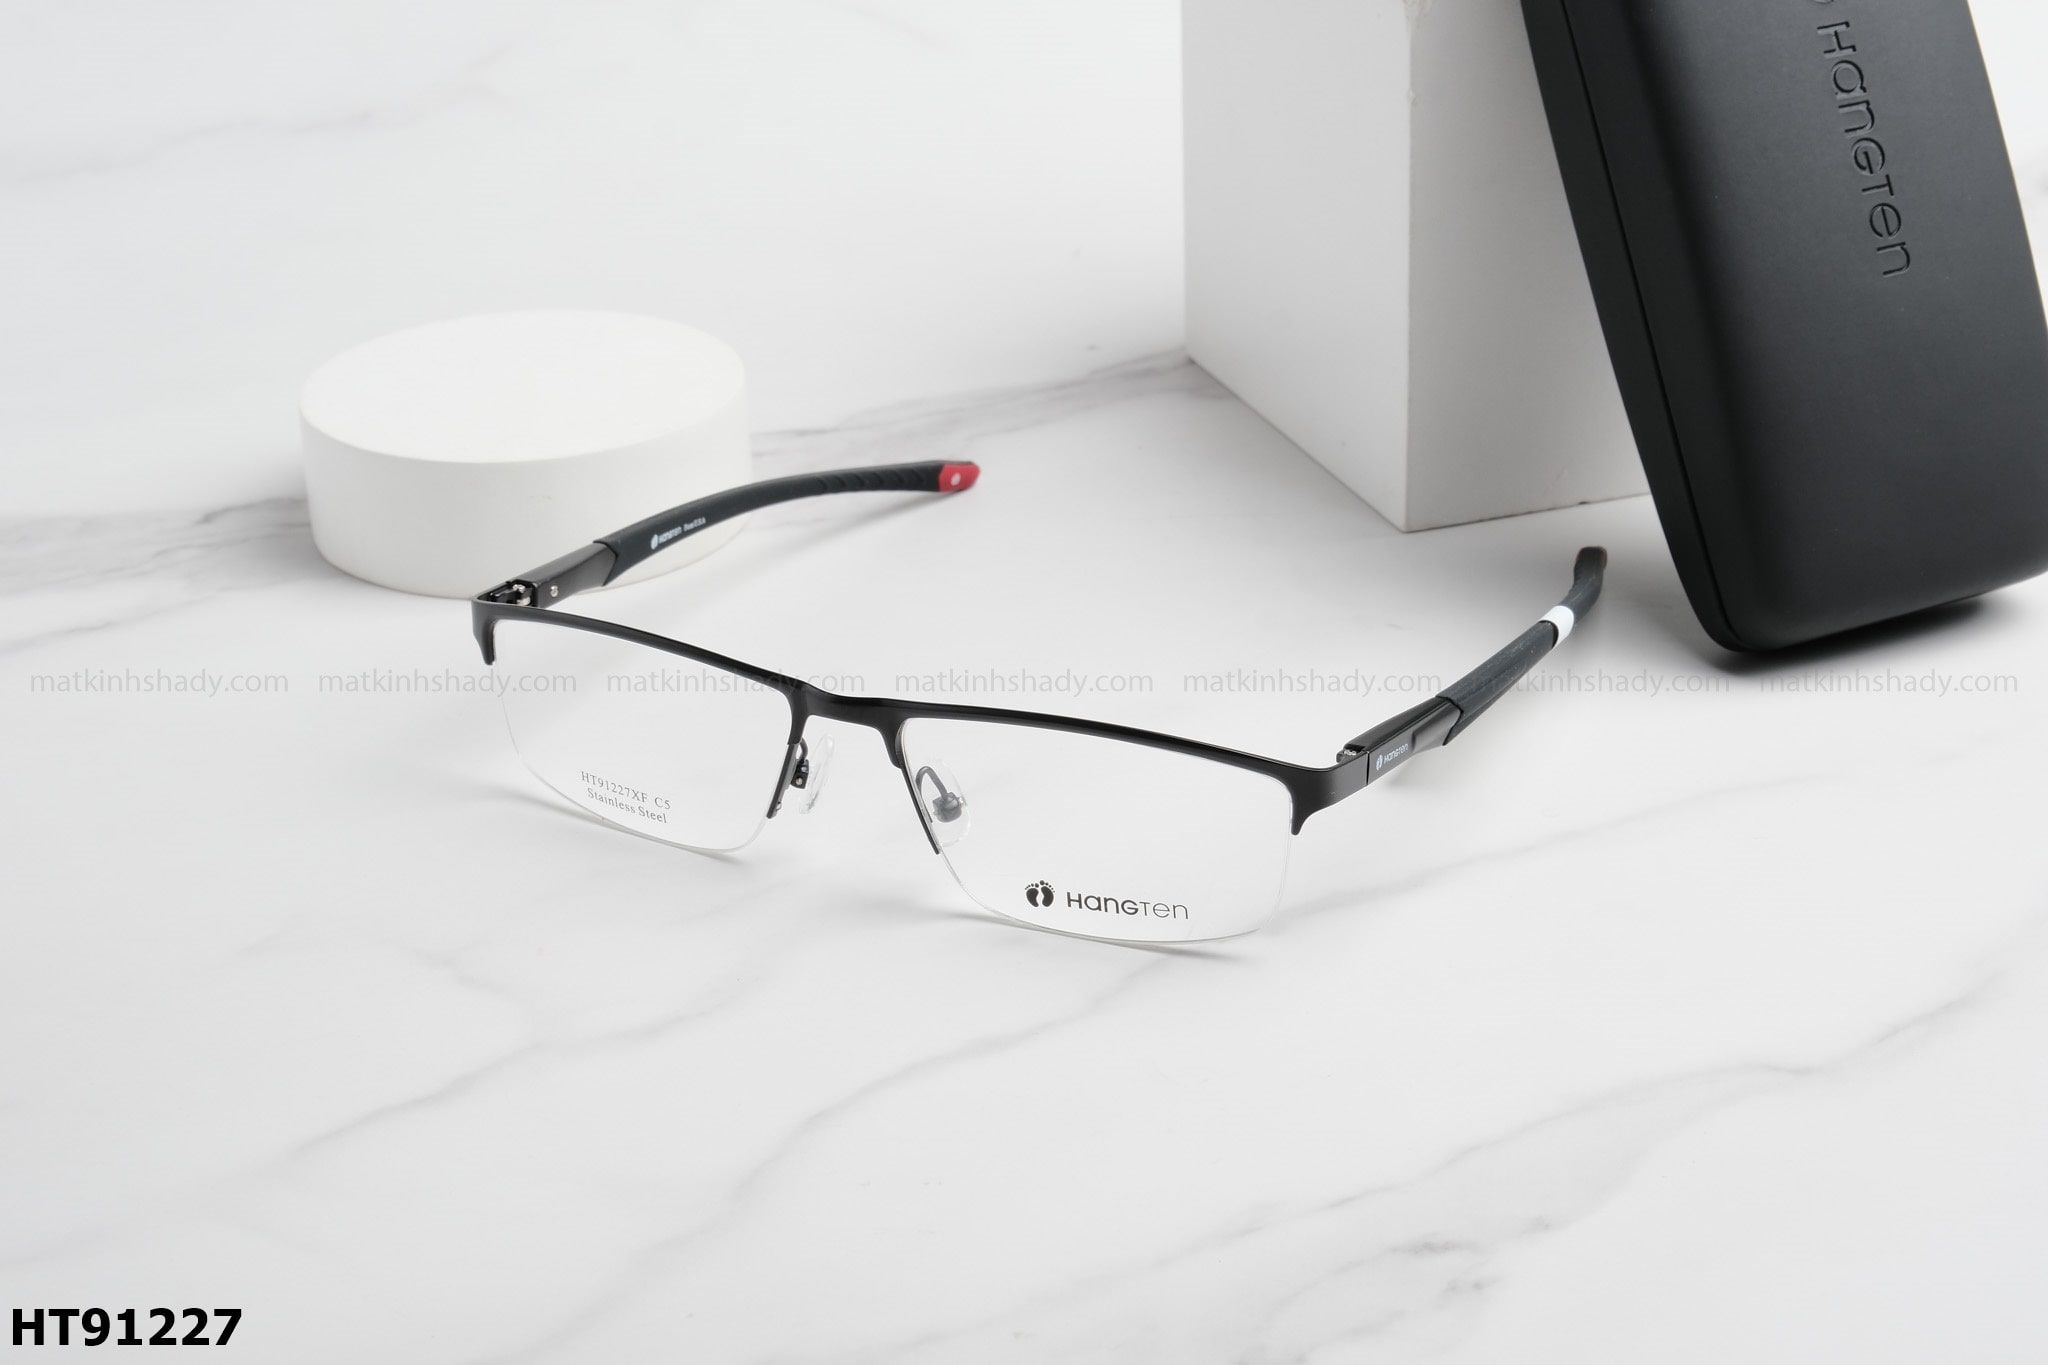  Hangten Eyewear - Glasses - HT91227 